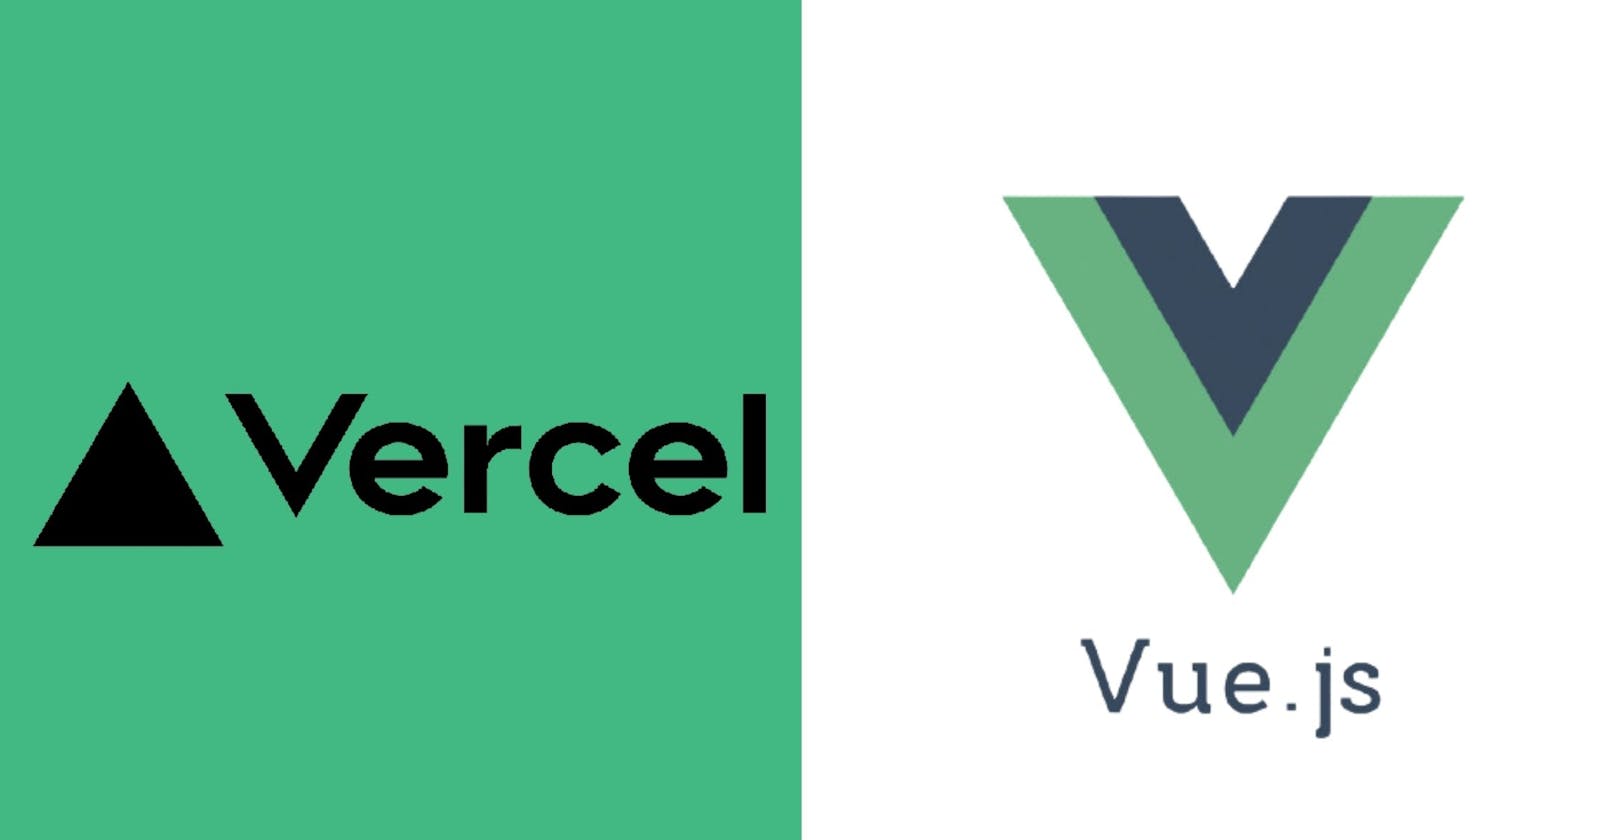 Deploy your Vue application using Vercel